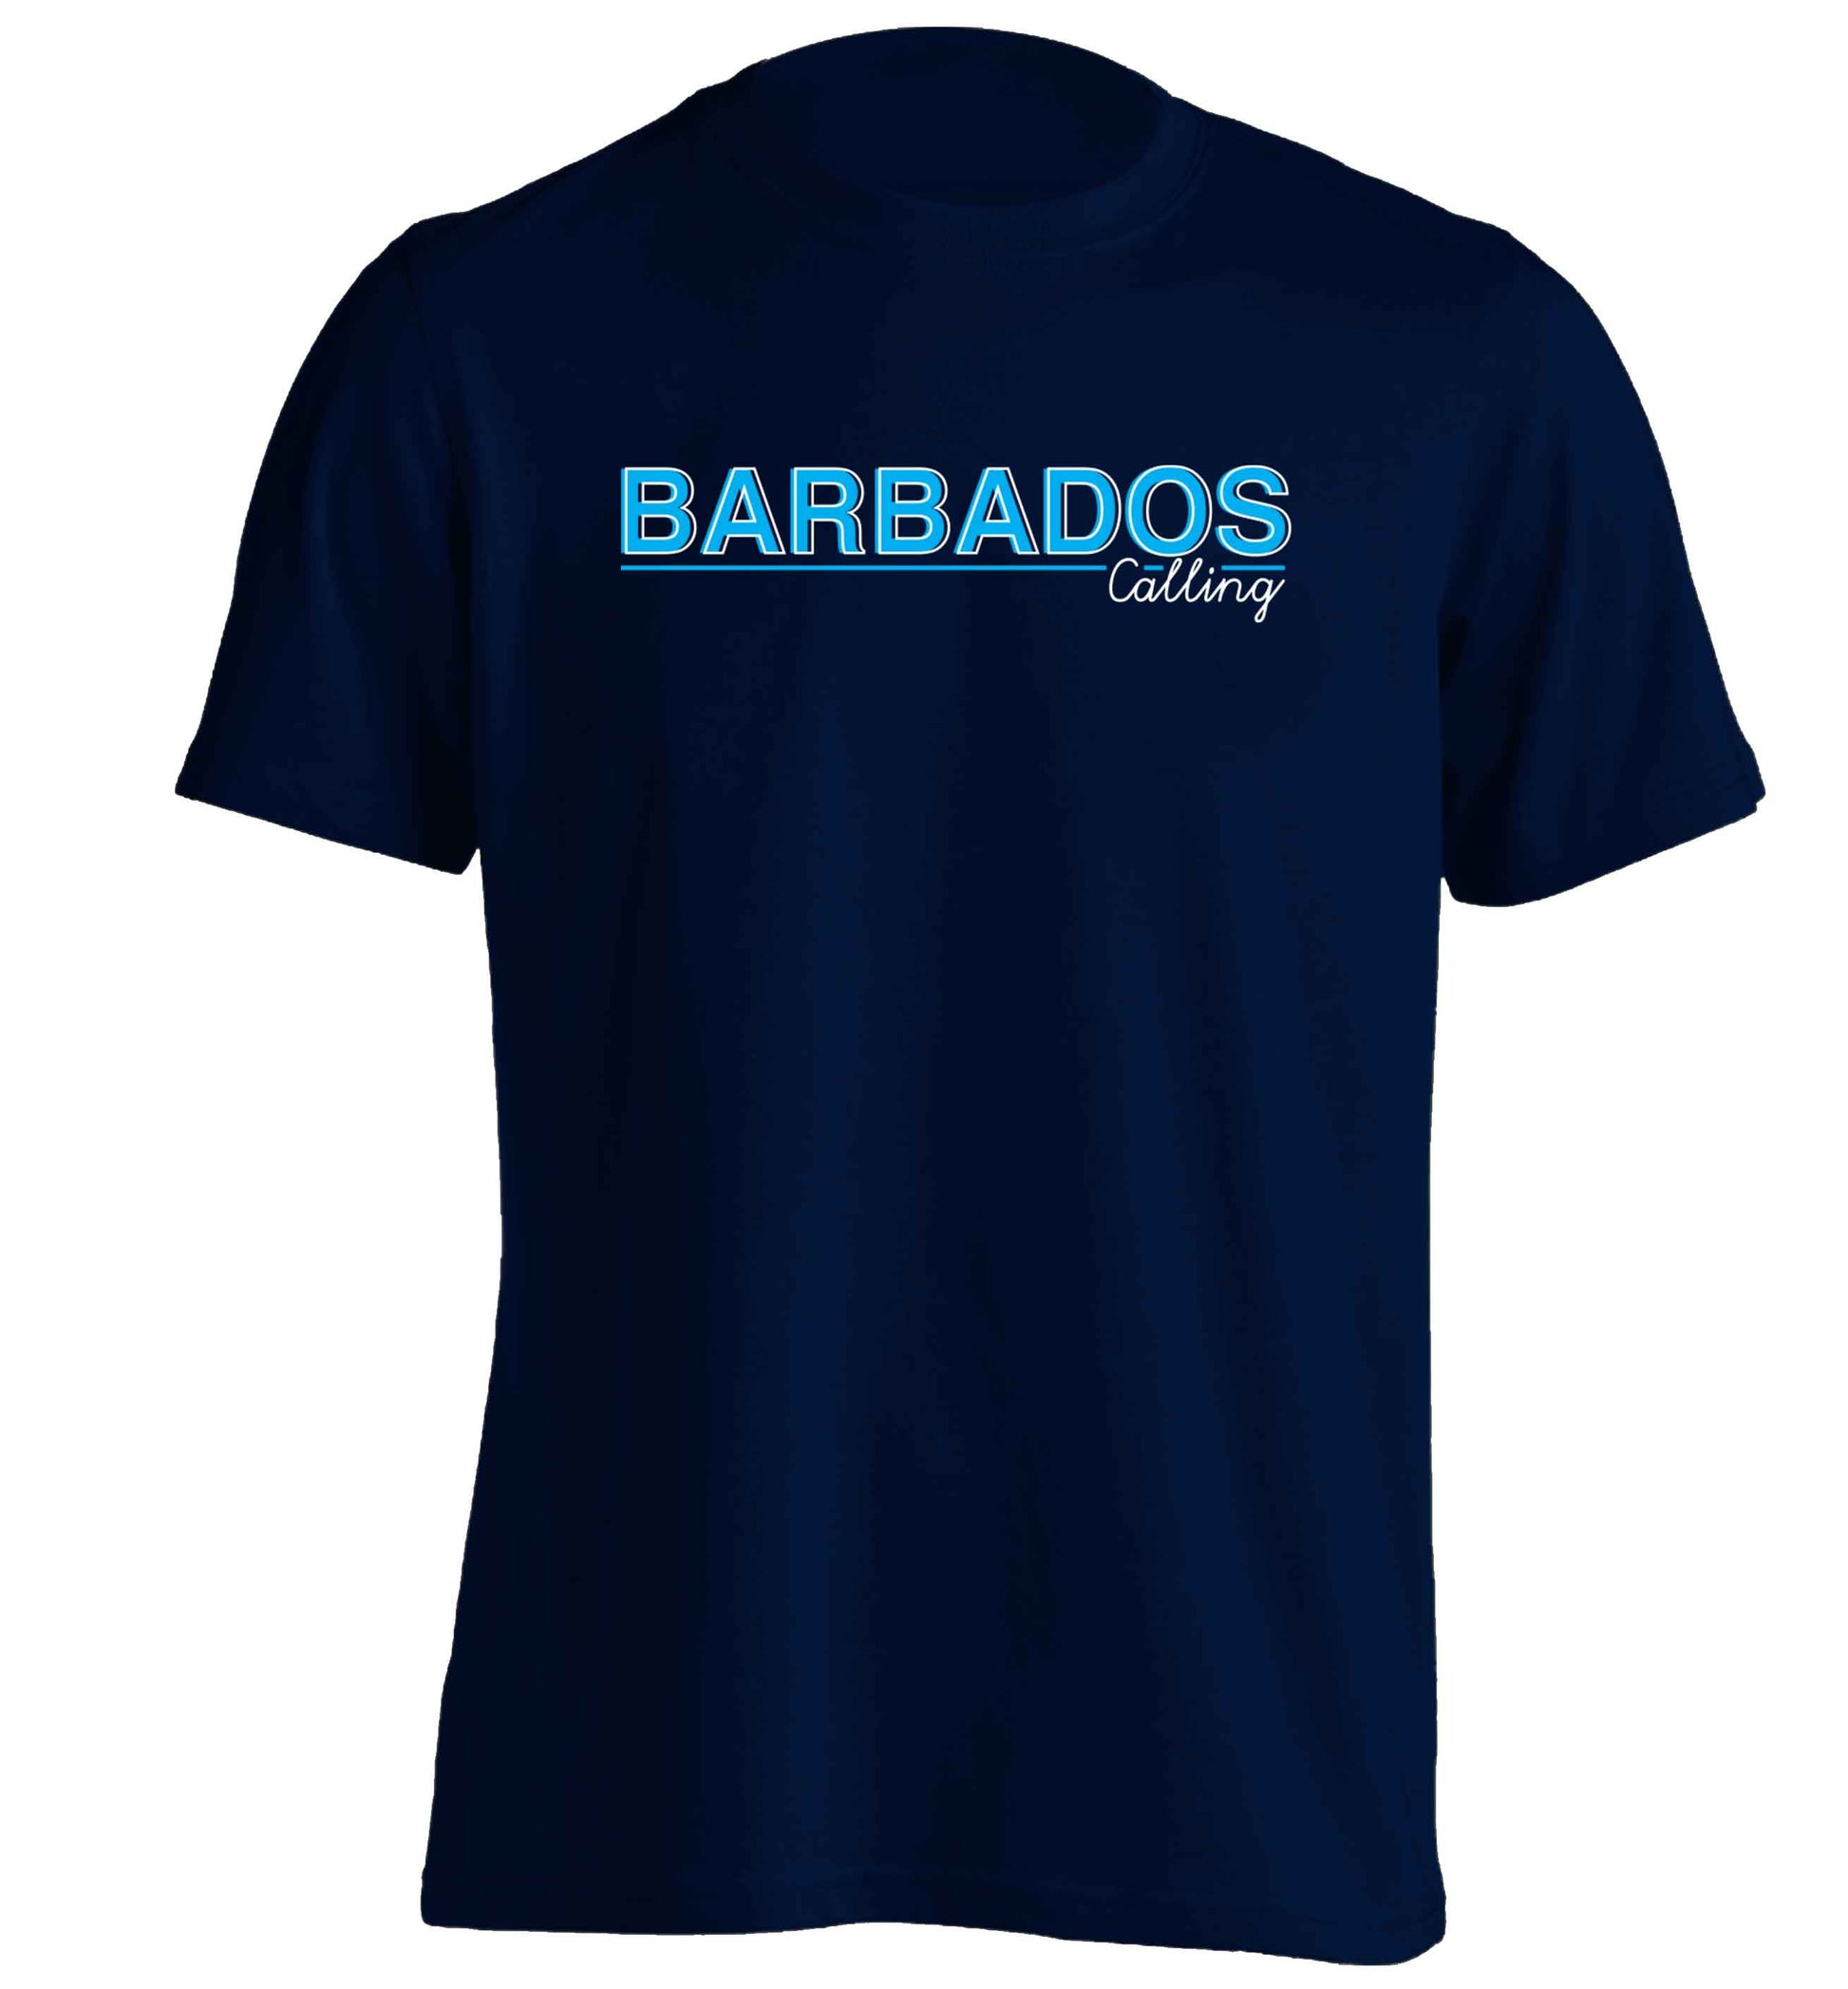 Barbados calling adults unisex navy Tshirt 2XL